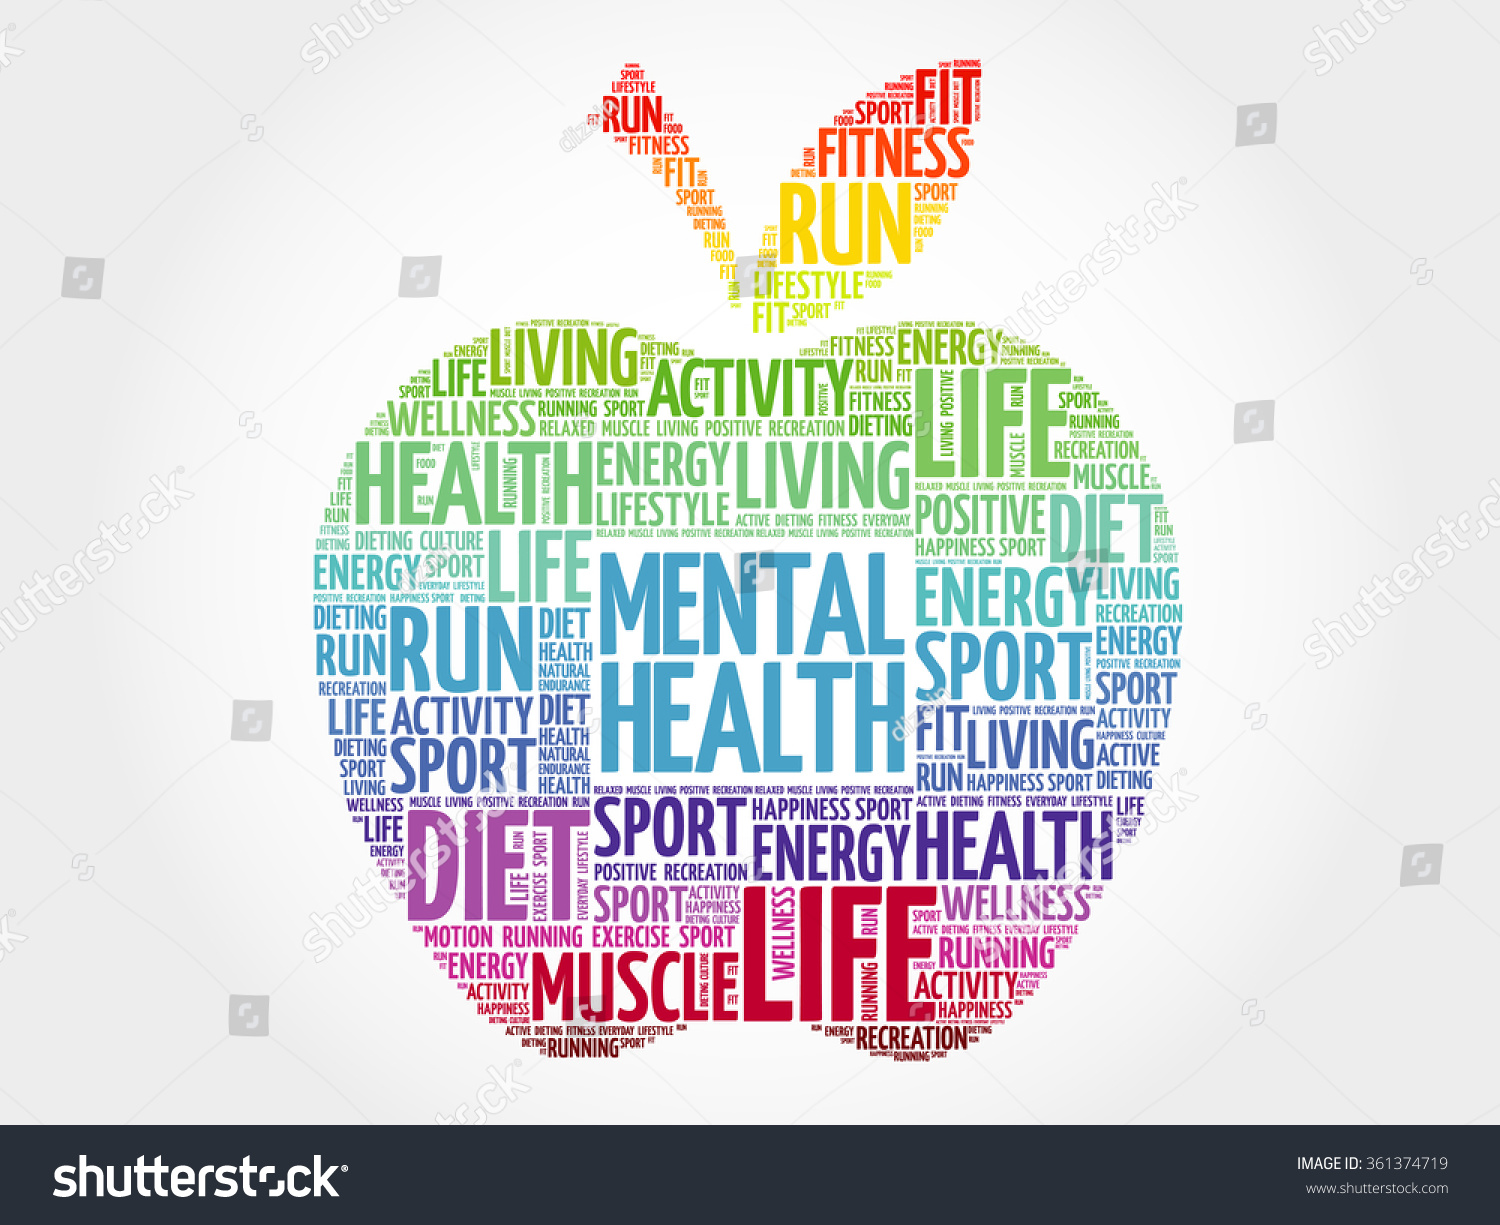 stock-vector-mental-health-apple-word-cloud-health-concept-361374719.jpg